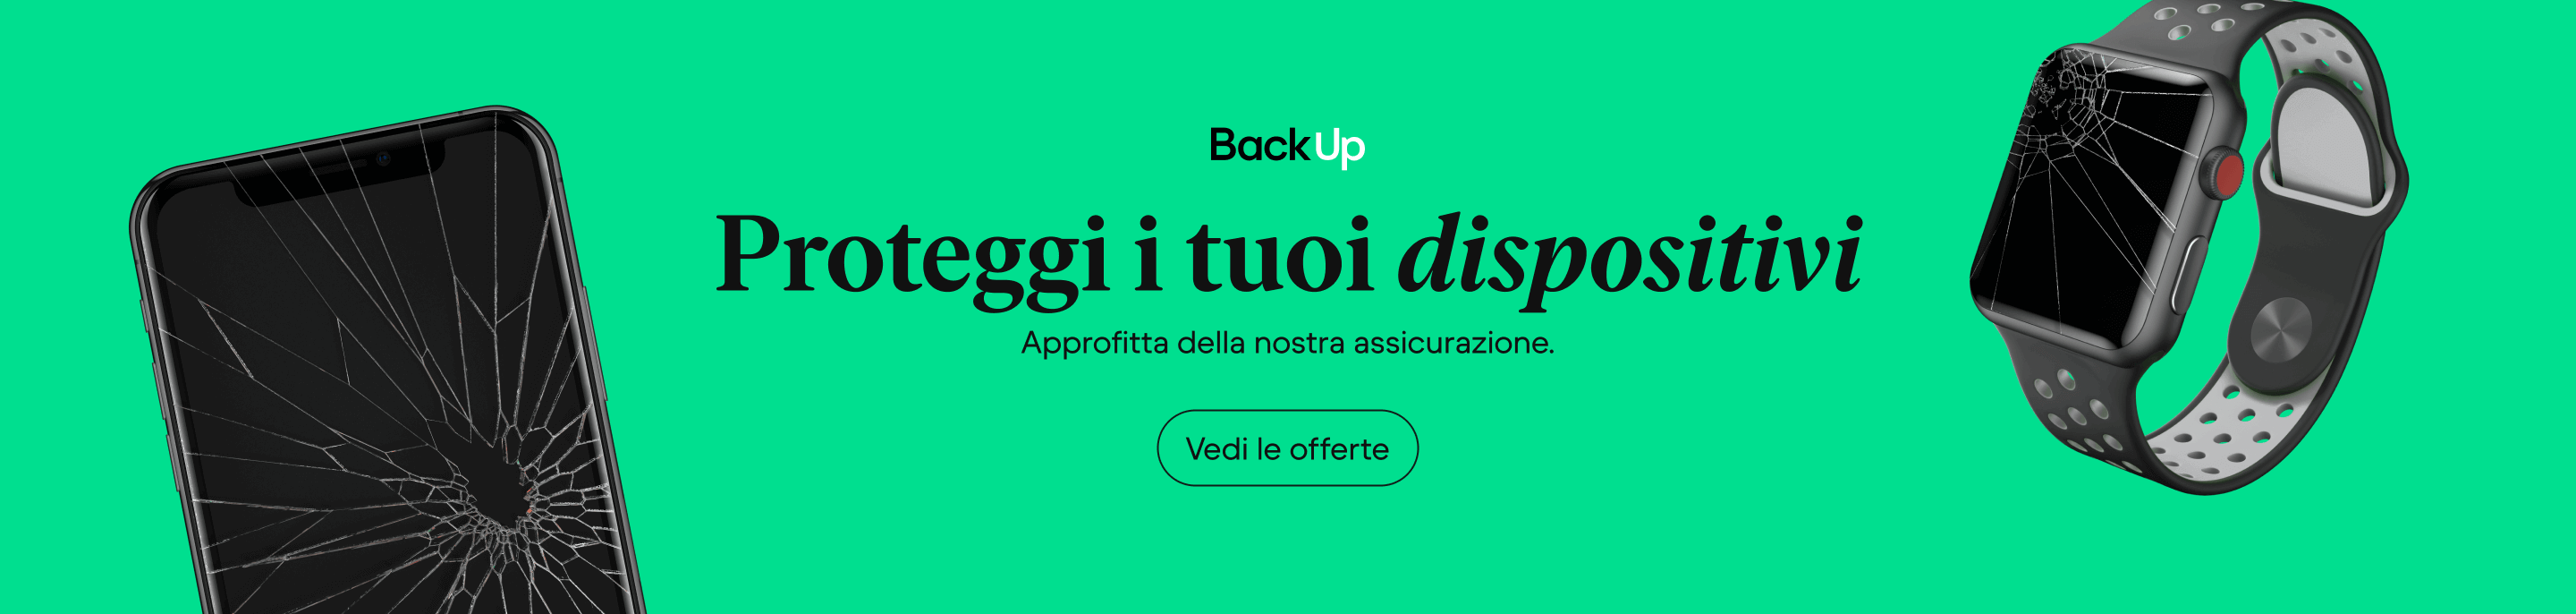 IT - BackUp